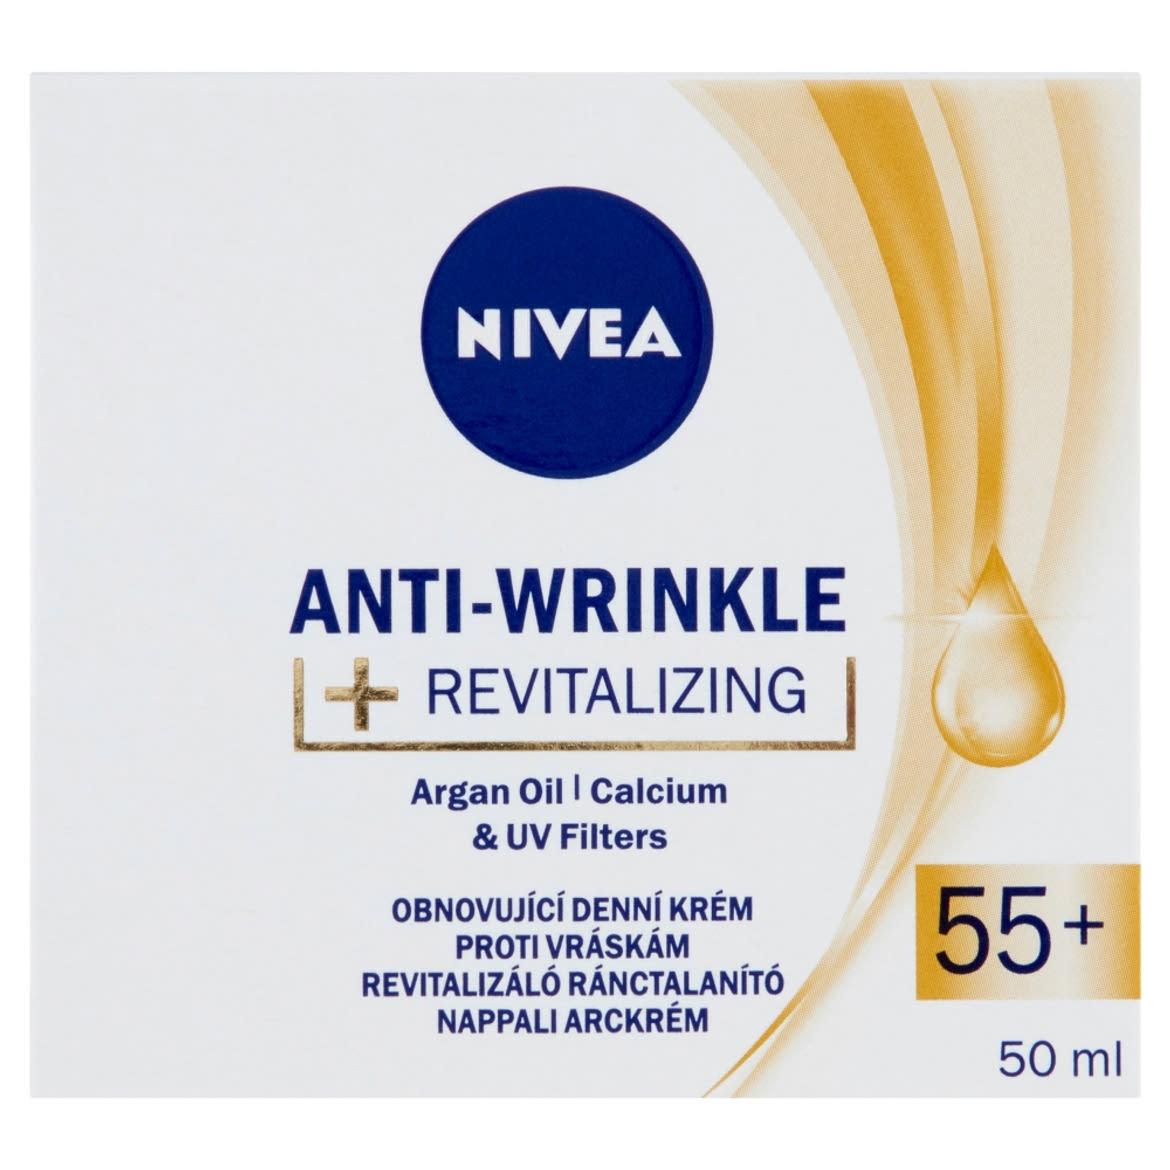 NIVEA Anti Wrinkle 55+ nappali arckrém